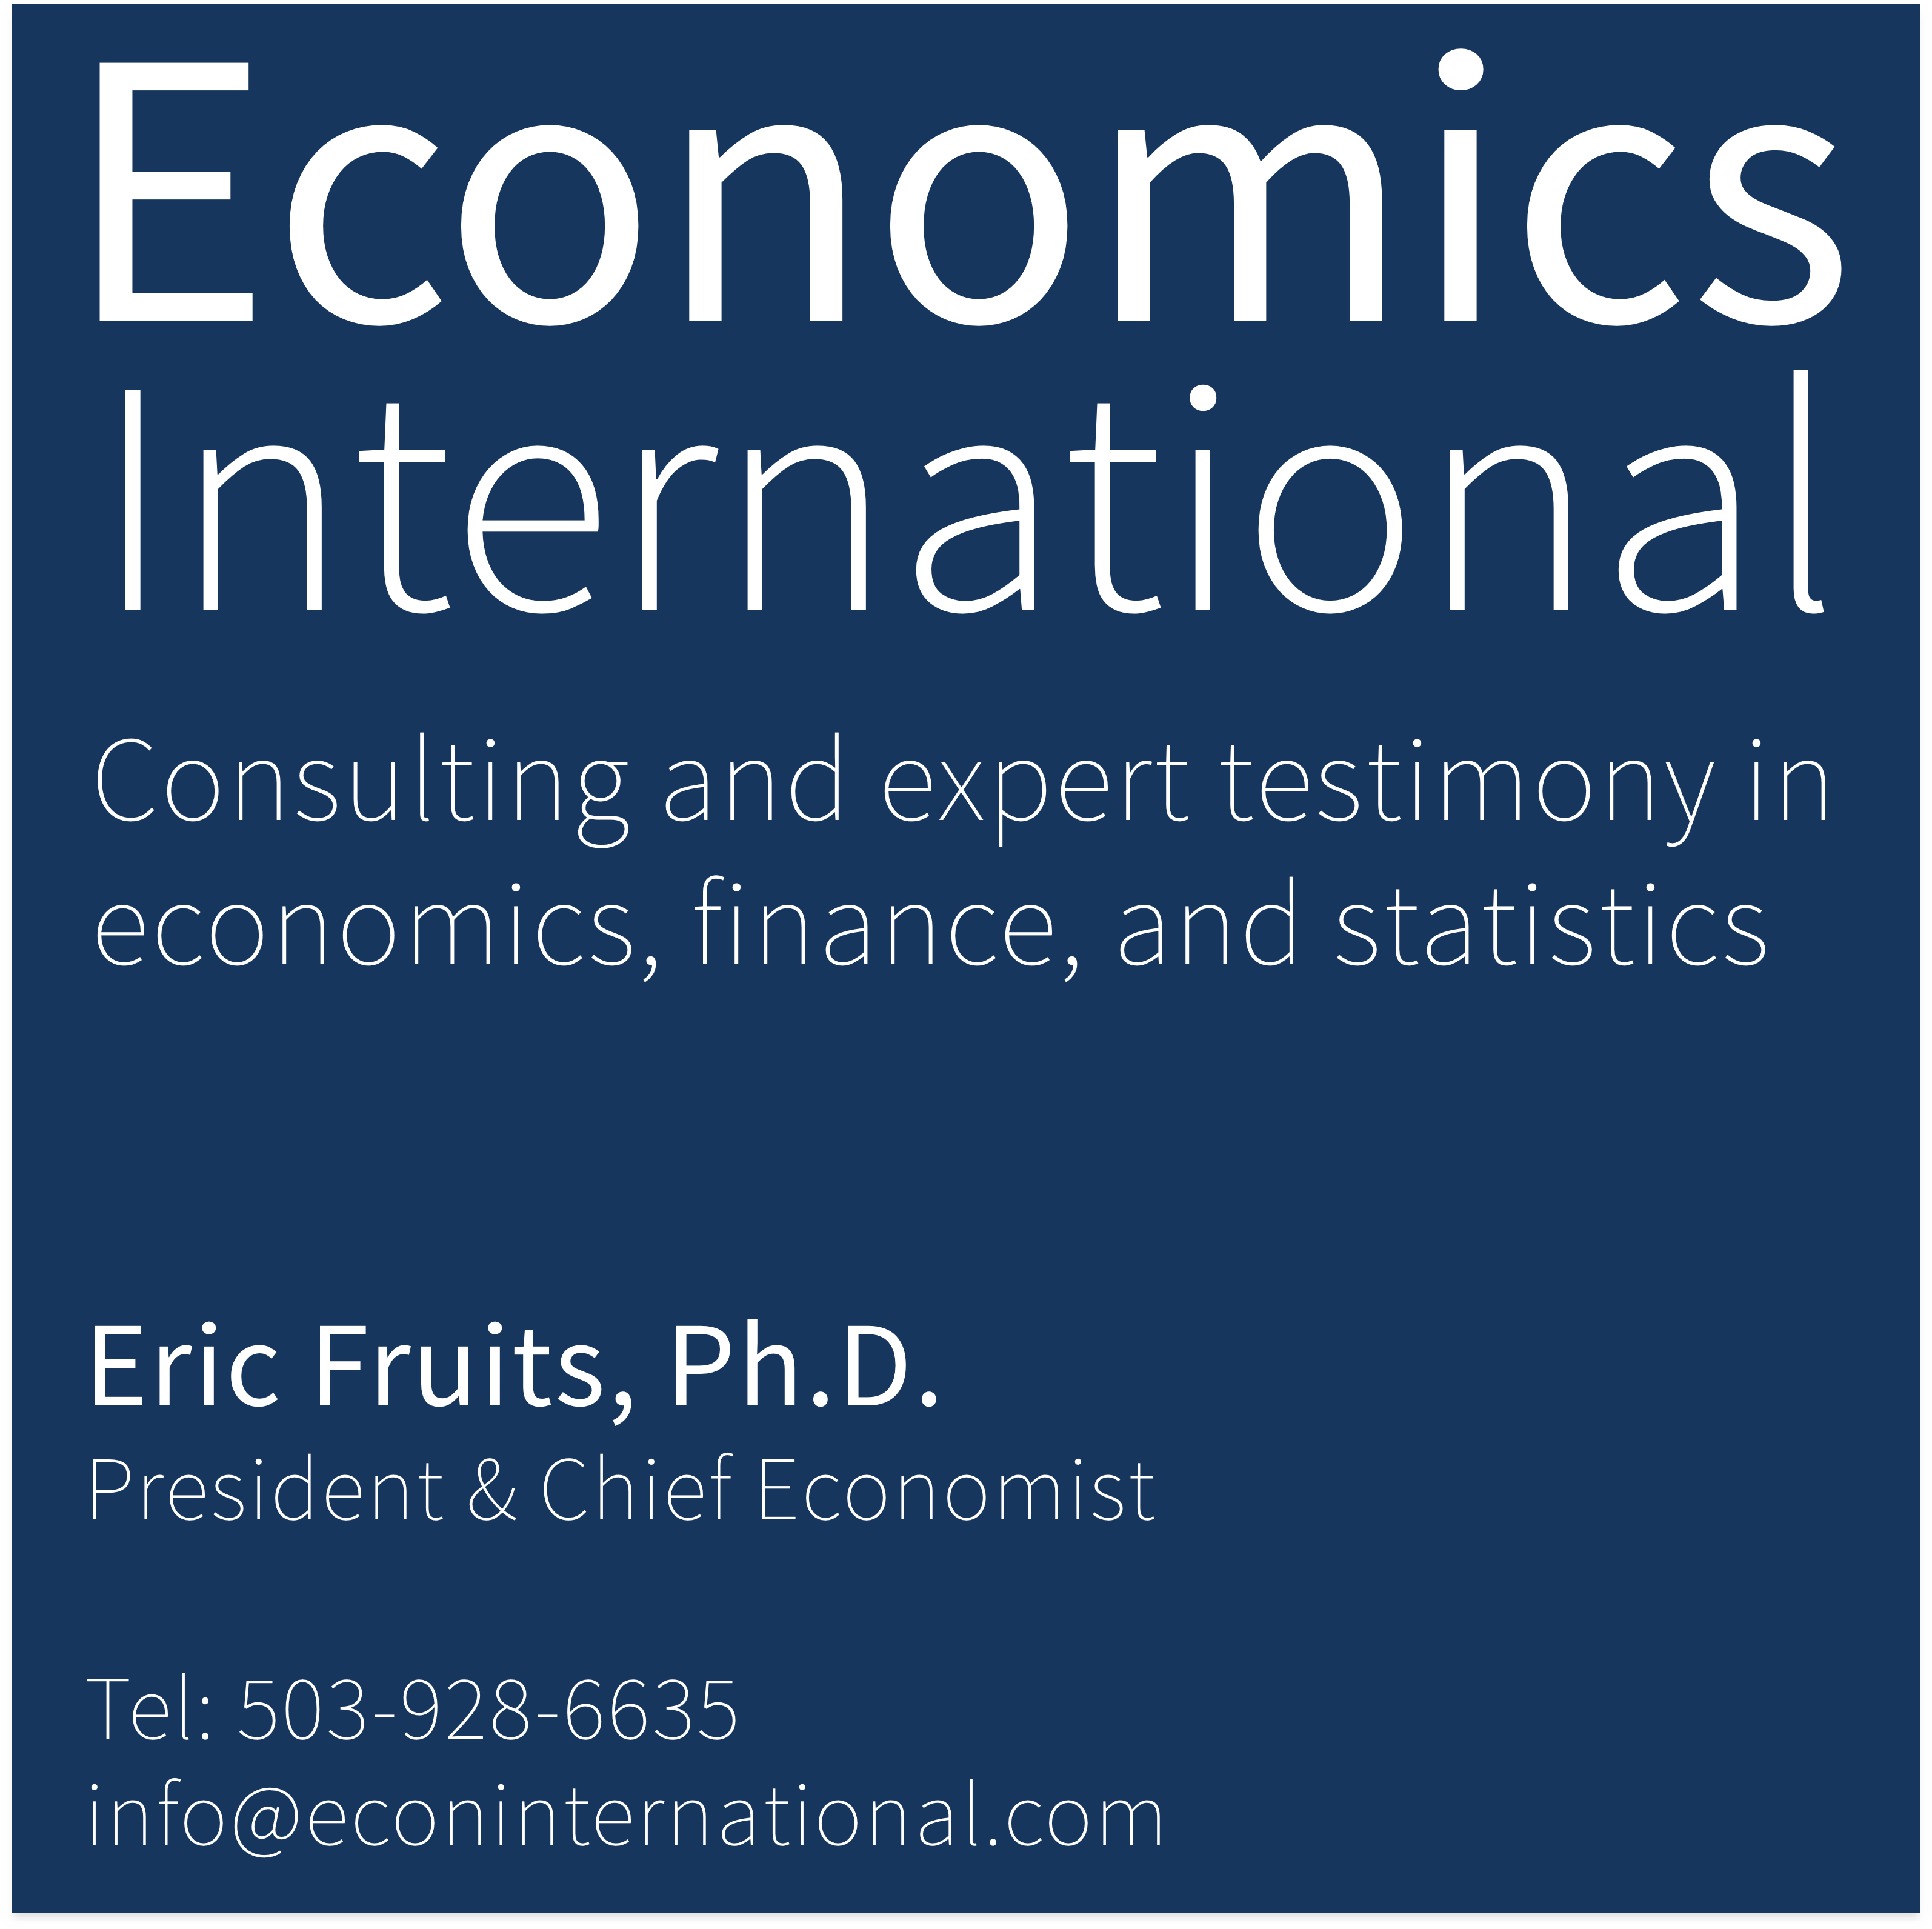 Economics International Corp